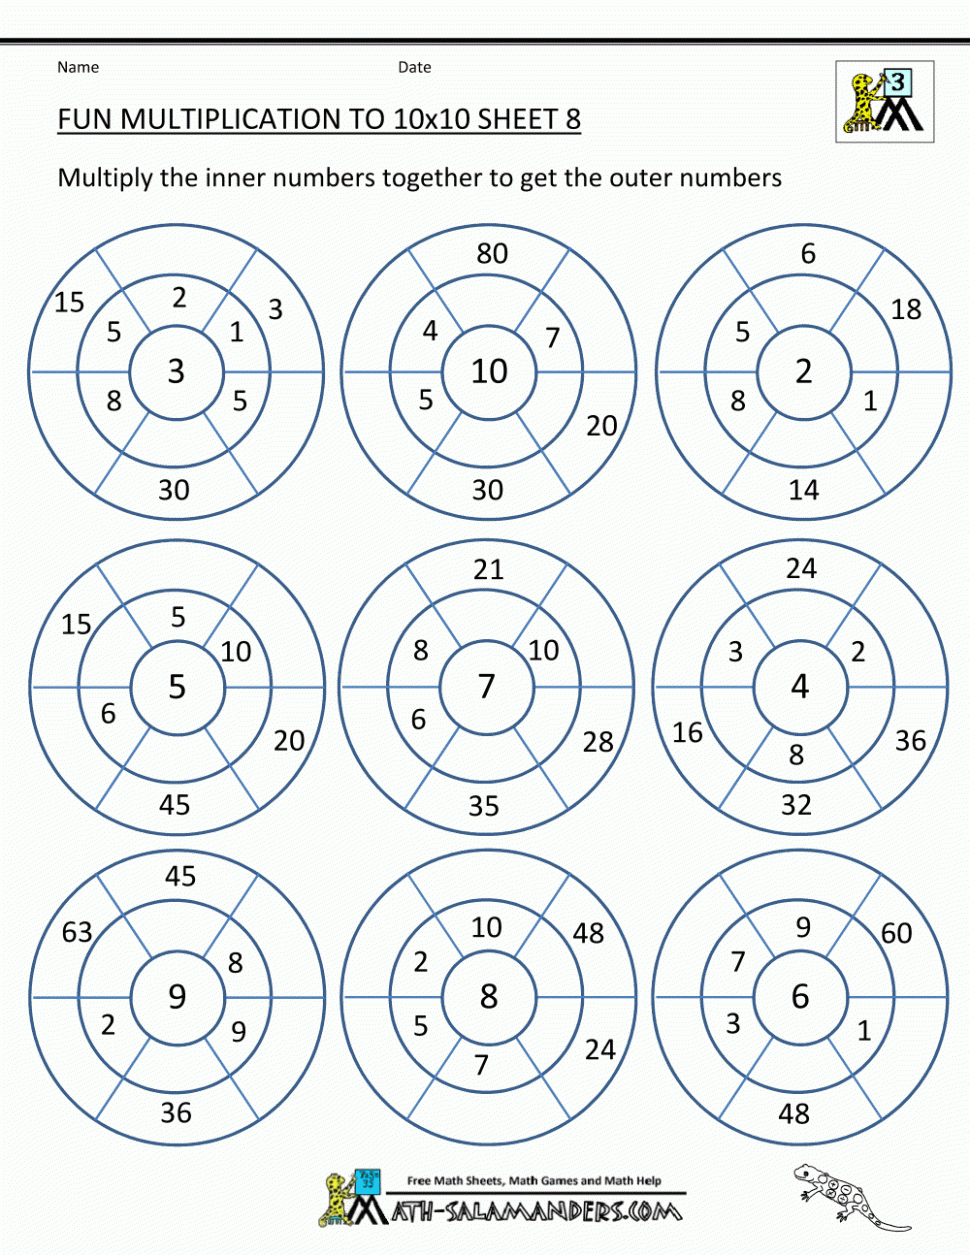 Printable Multiplication Games Ks2 PrintableMultiplication